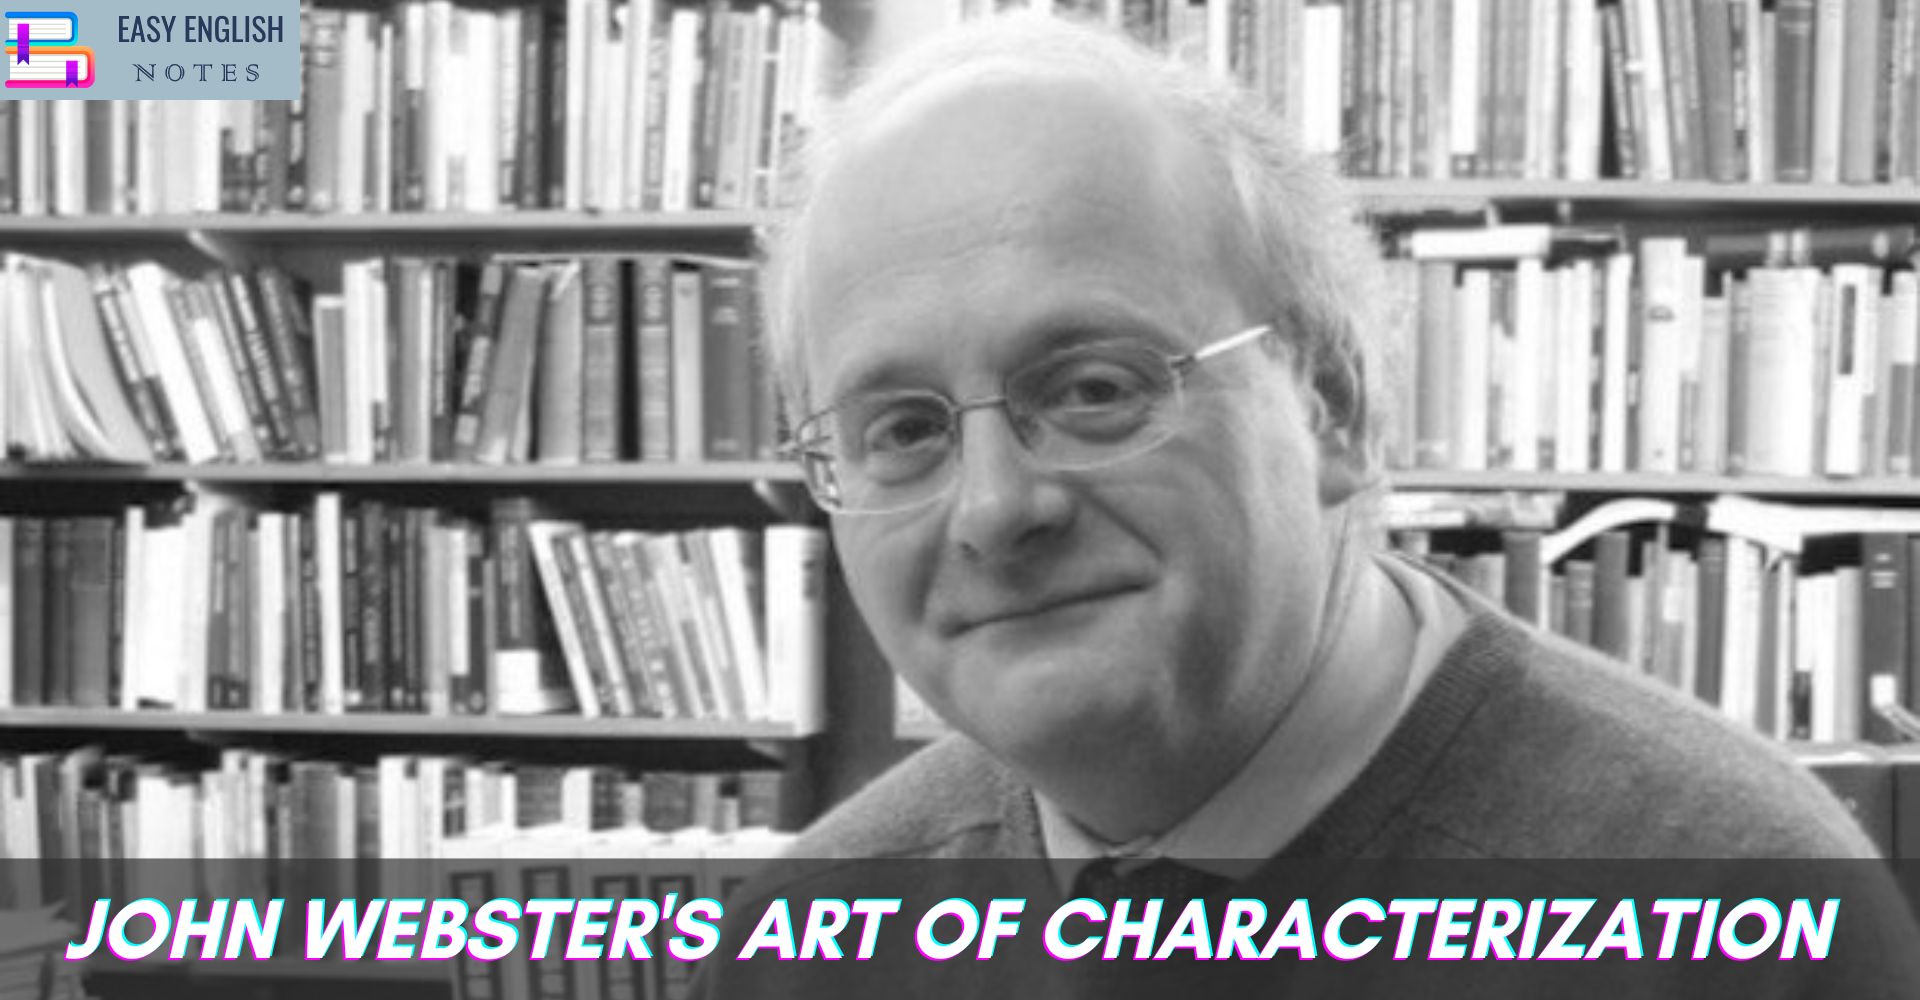 John Webster's Art of Characterization